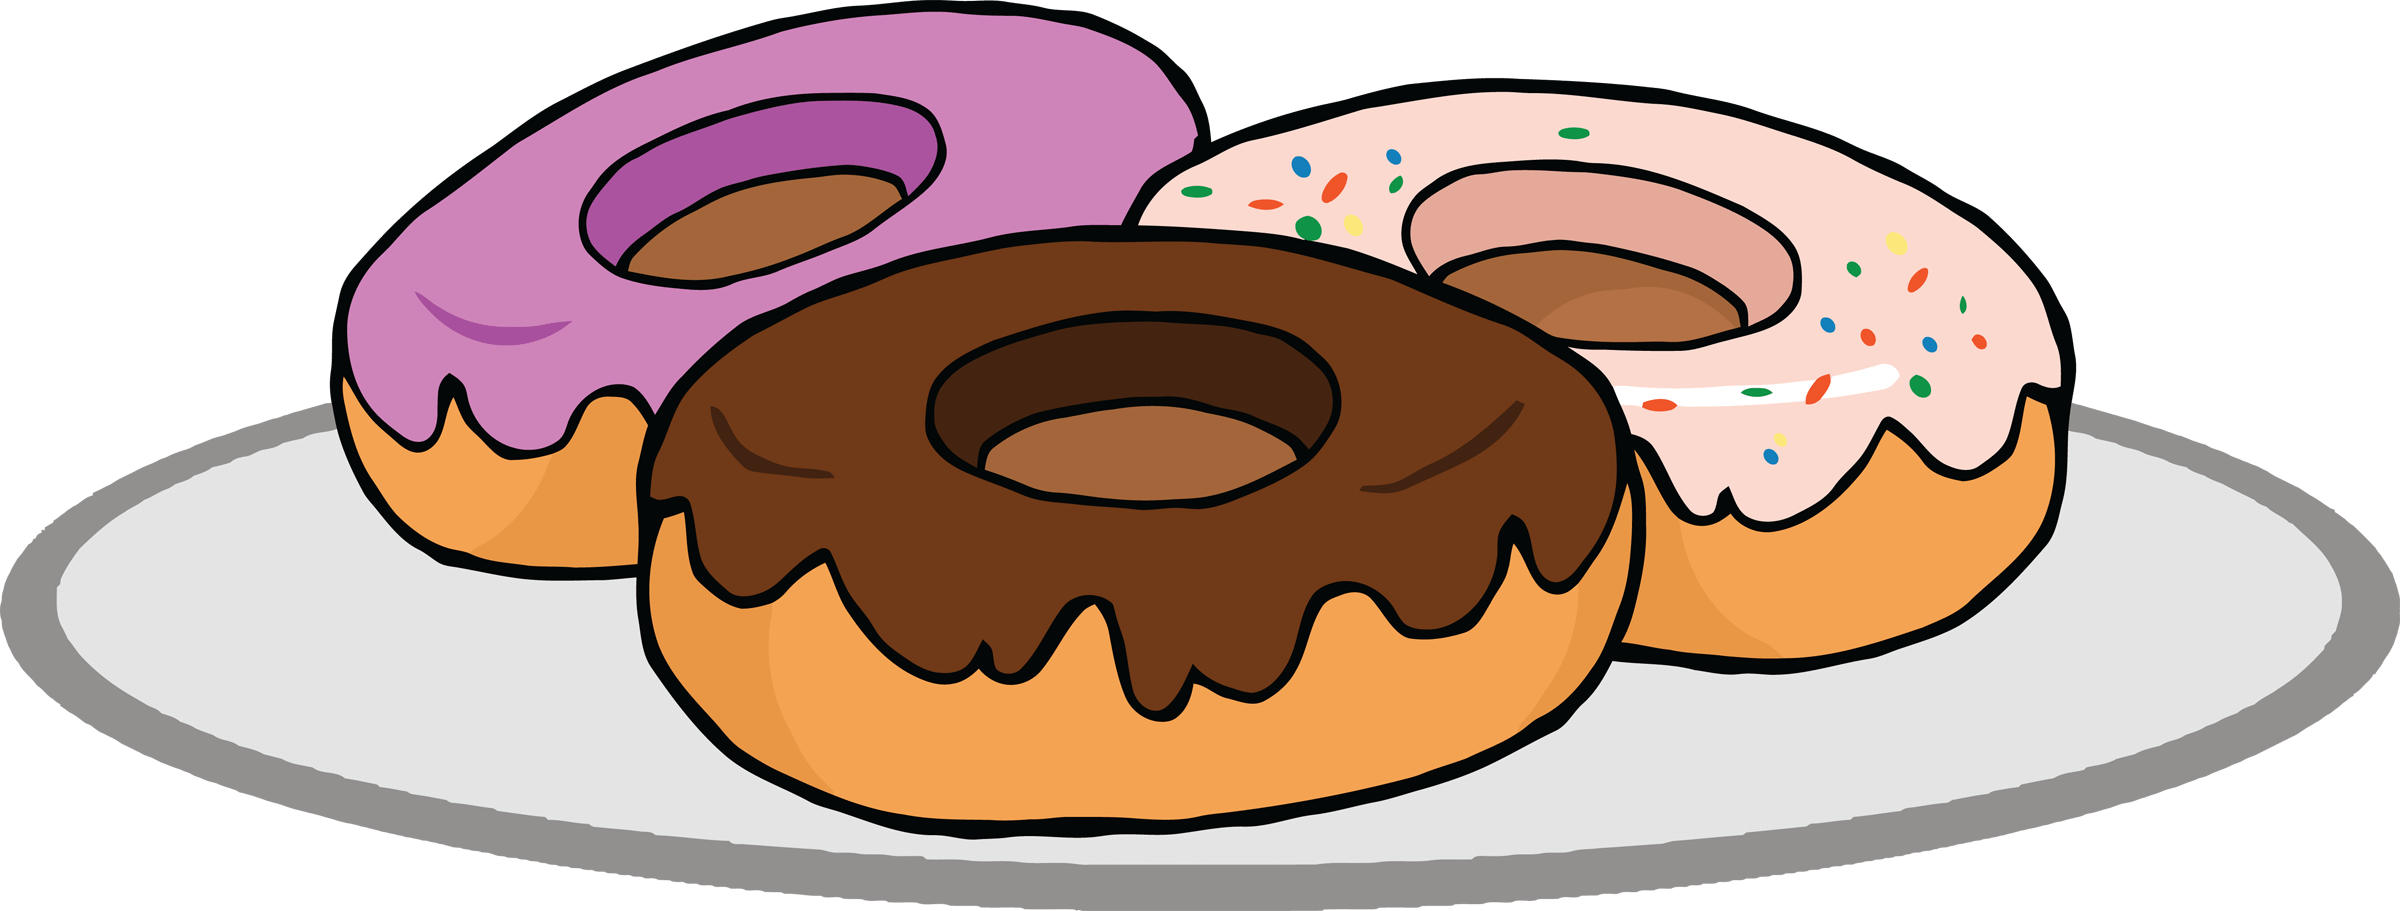 Donut Clipart